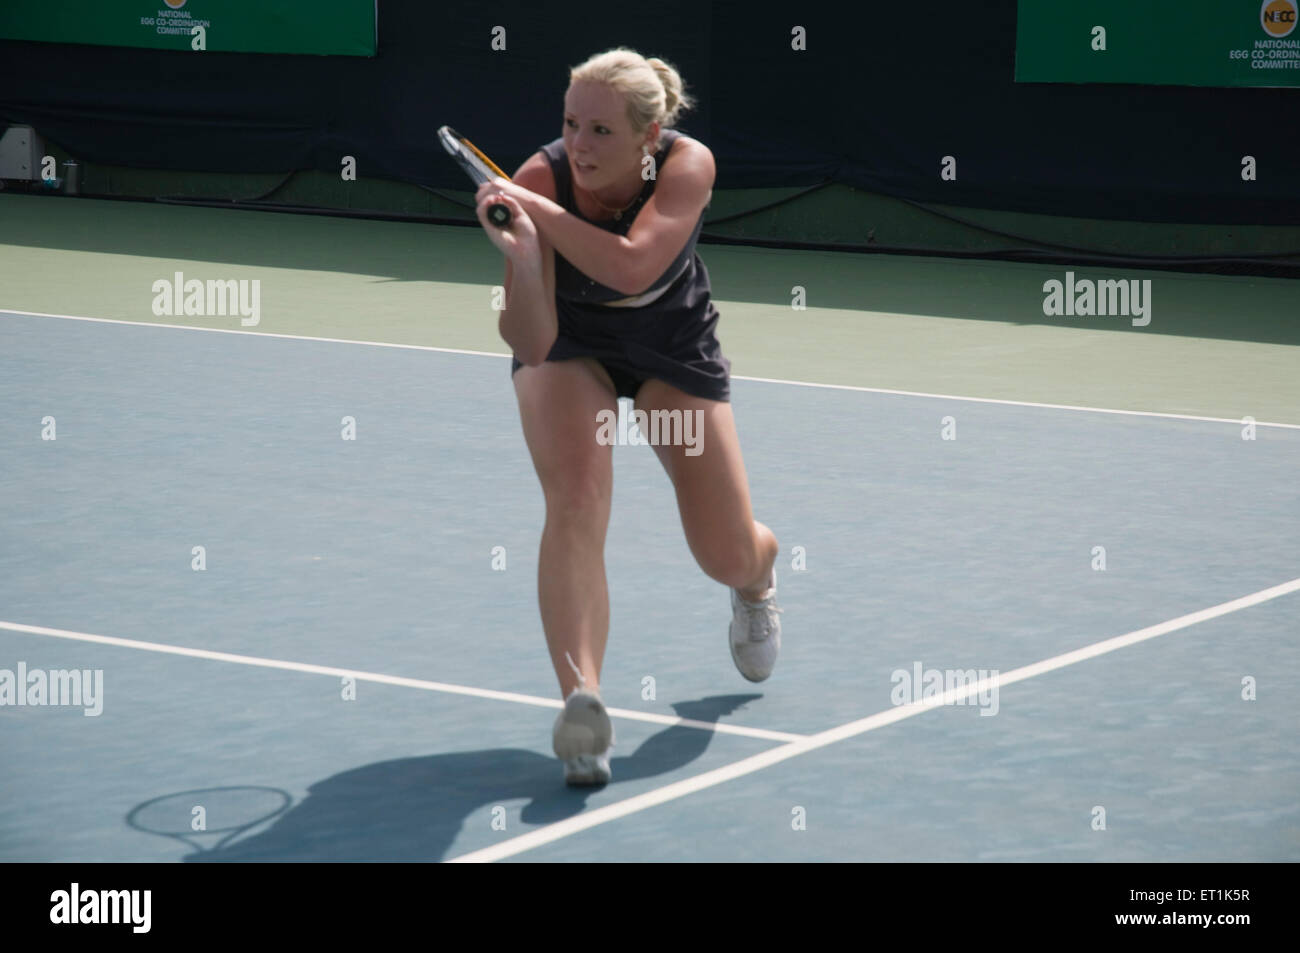 Donna giocando a tennis Foto Stock